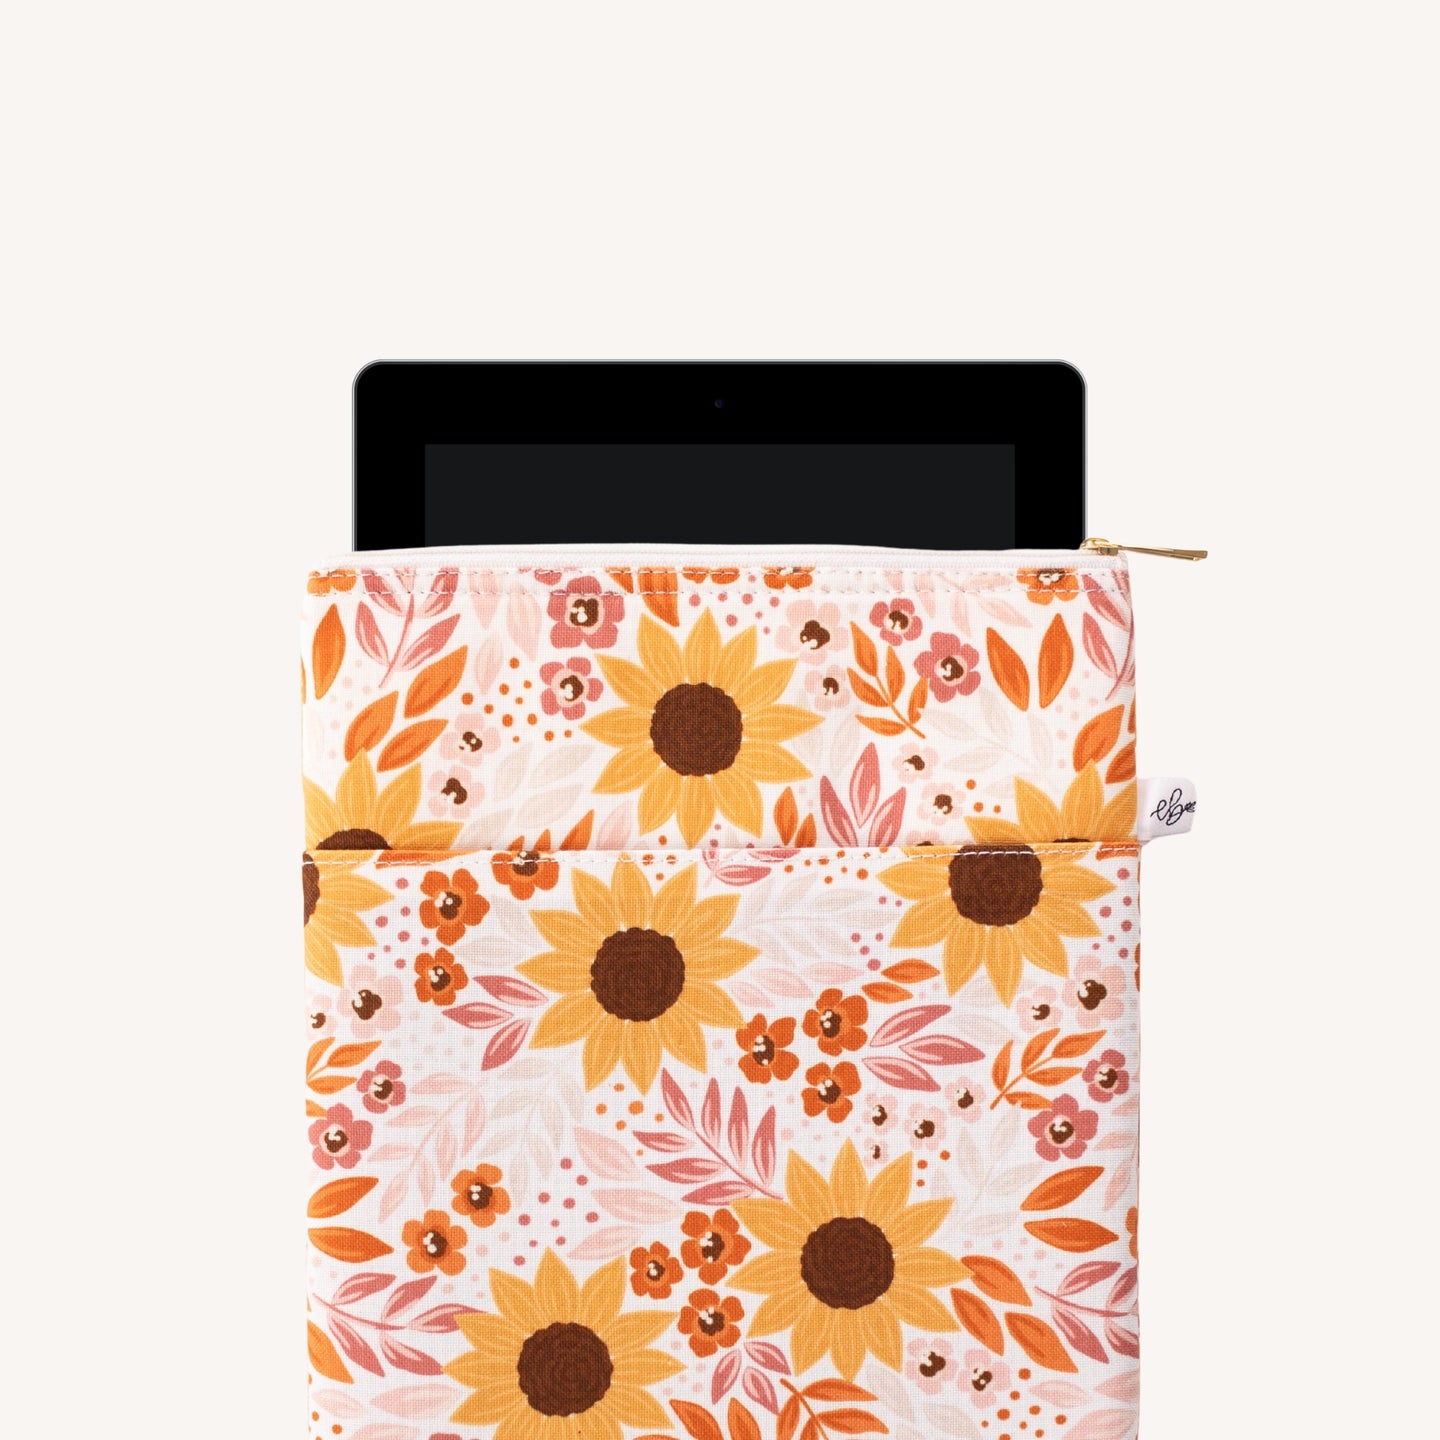 Sunflower Field Tablet Sleeve